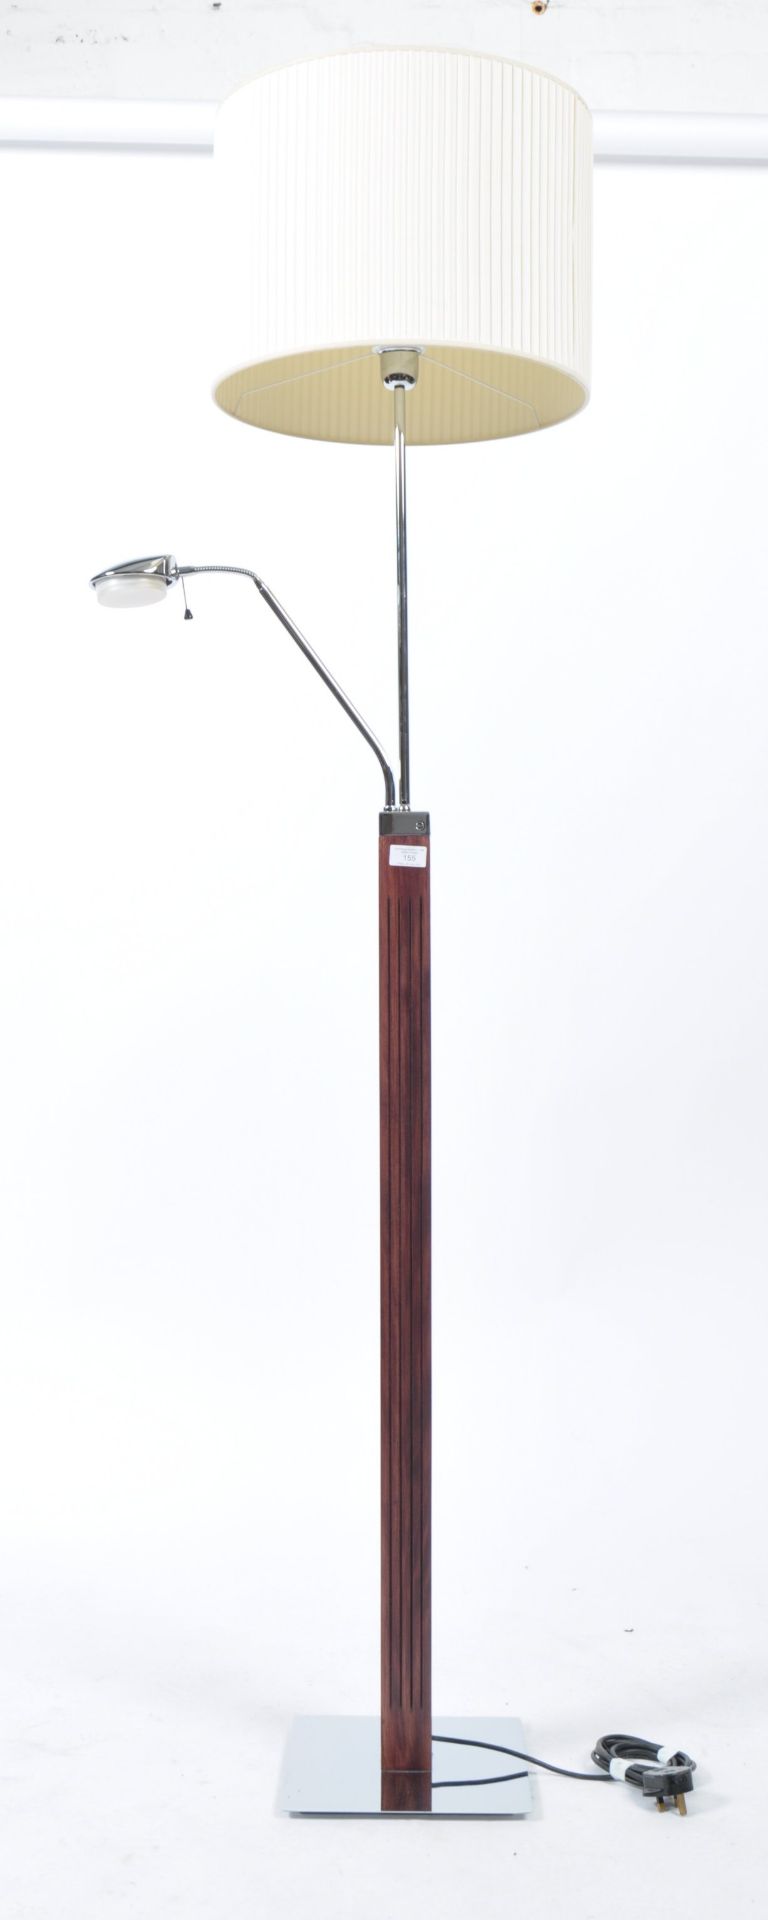 ART DECO REVIVAL CHROME & MAHOGANY STANDARD / FLOOR LAMP